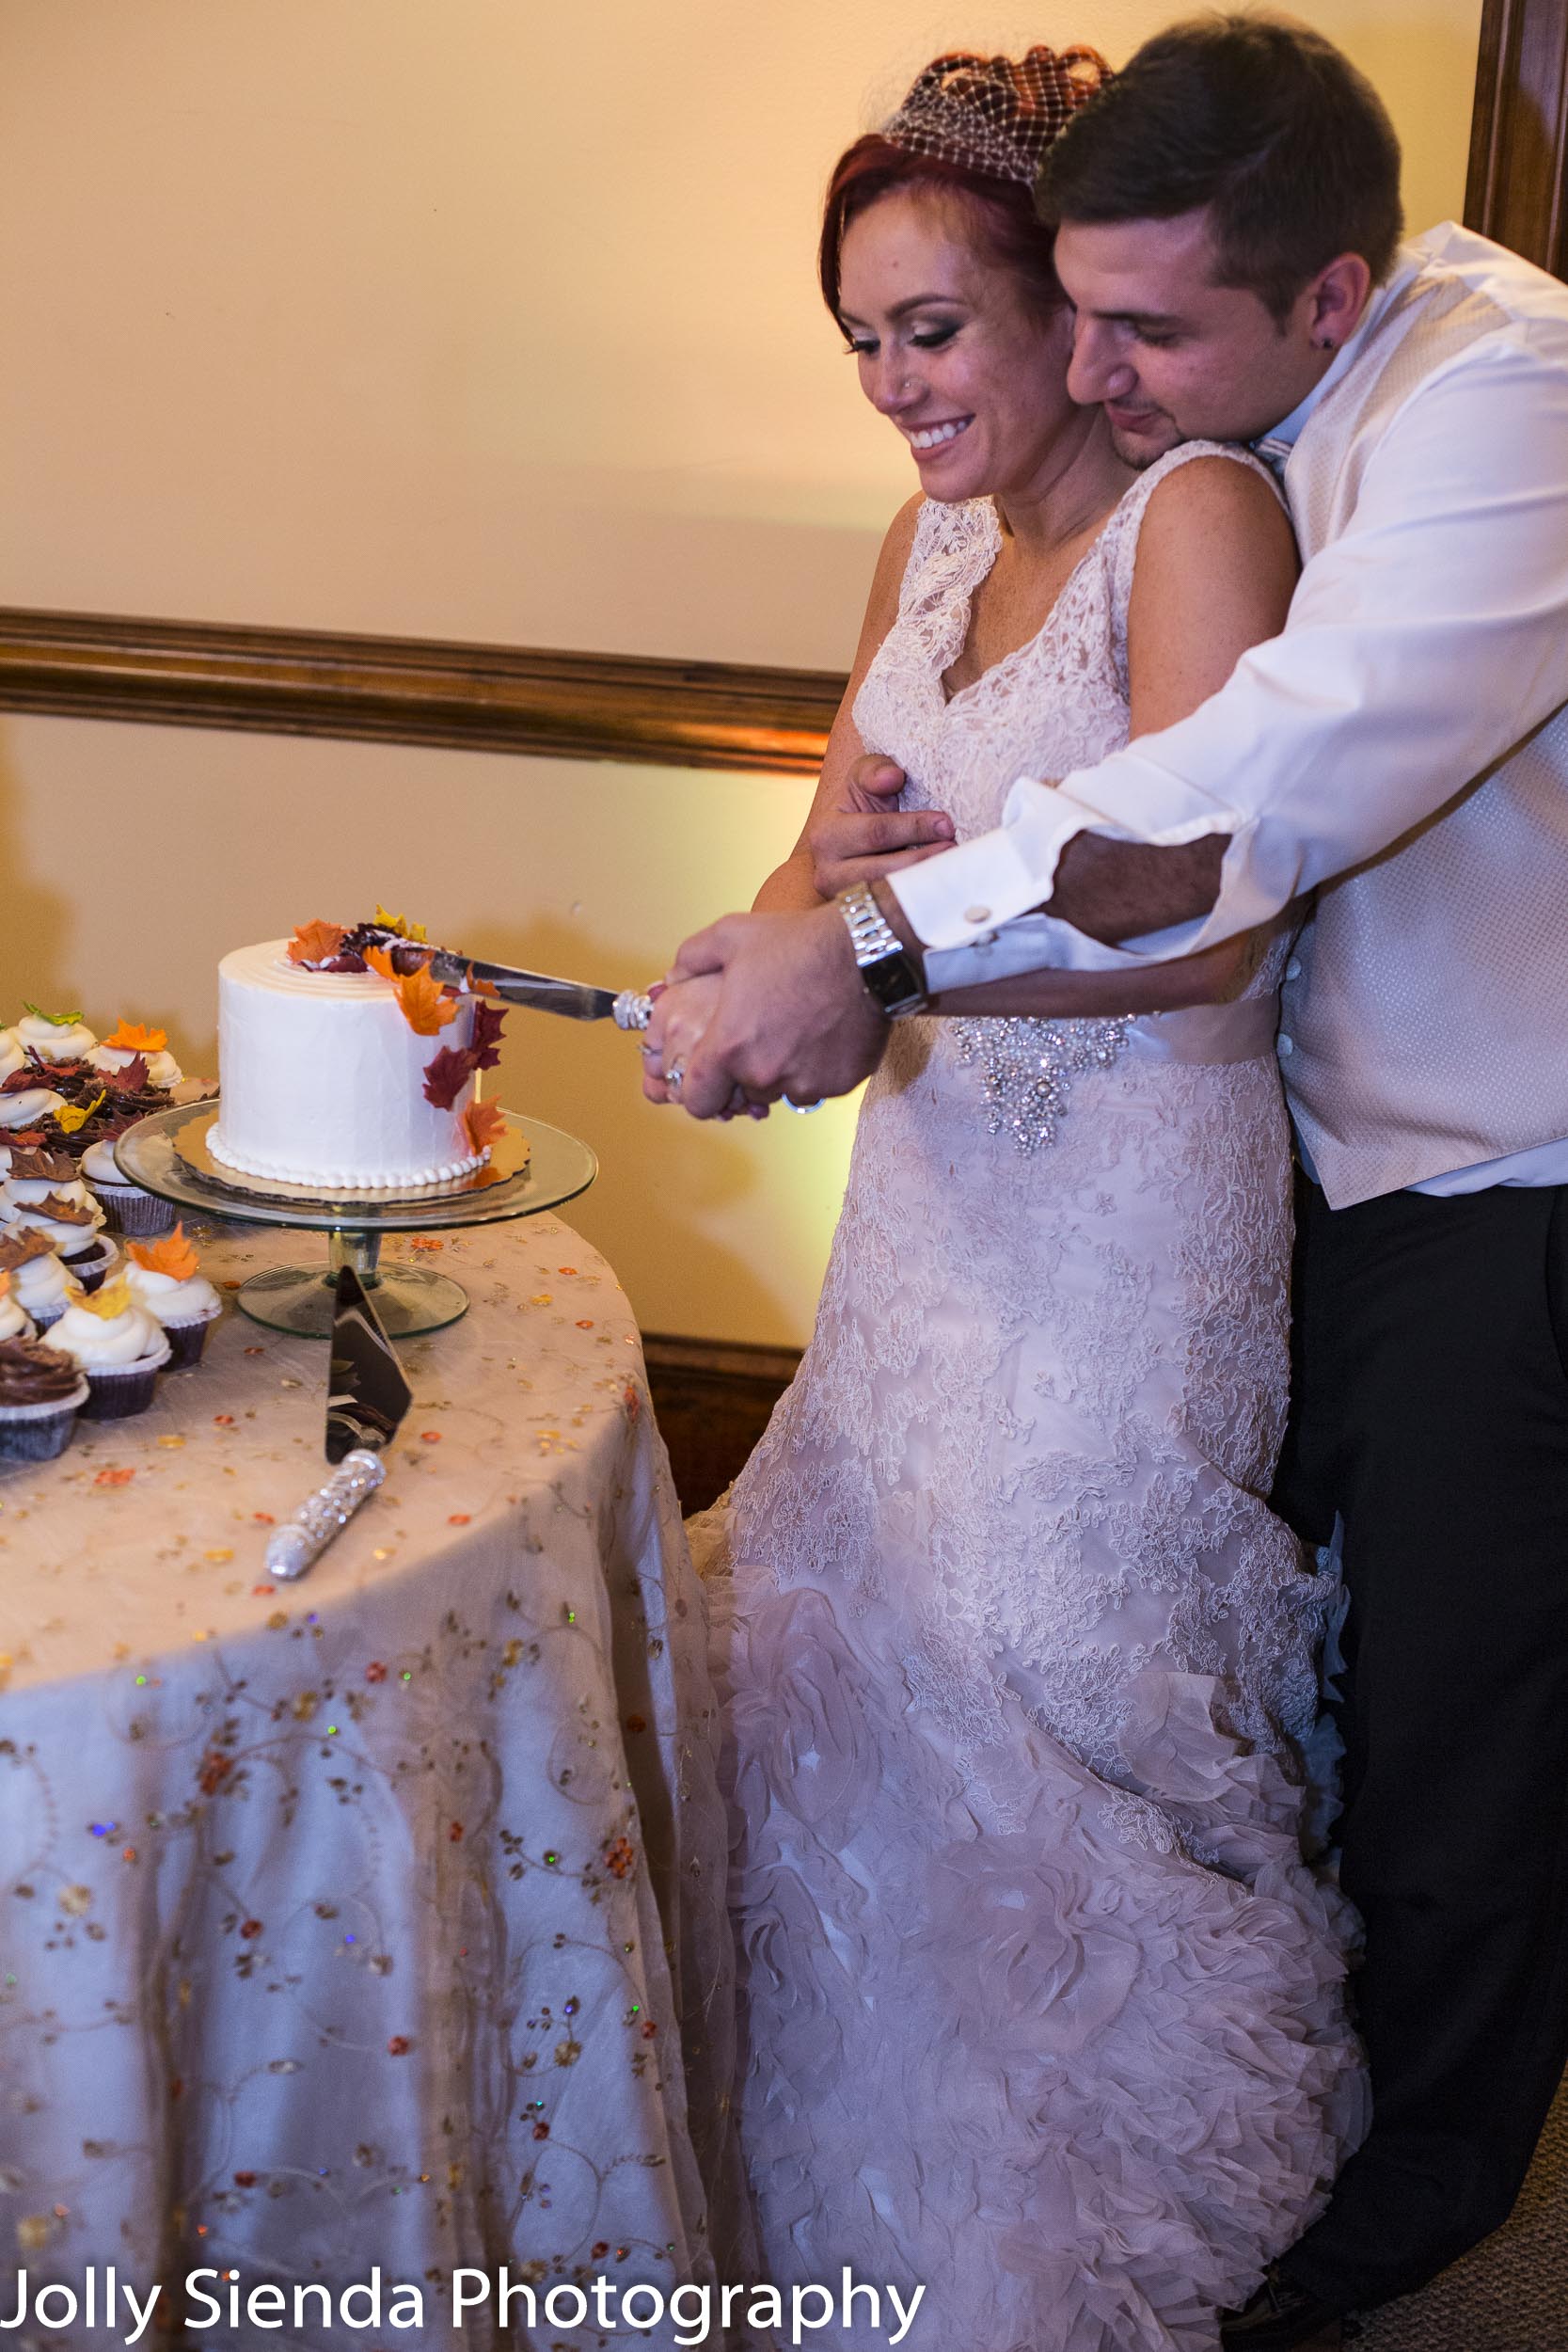 Cutting the autumn wedding cake